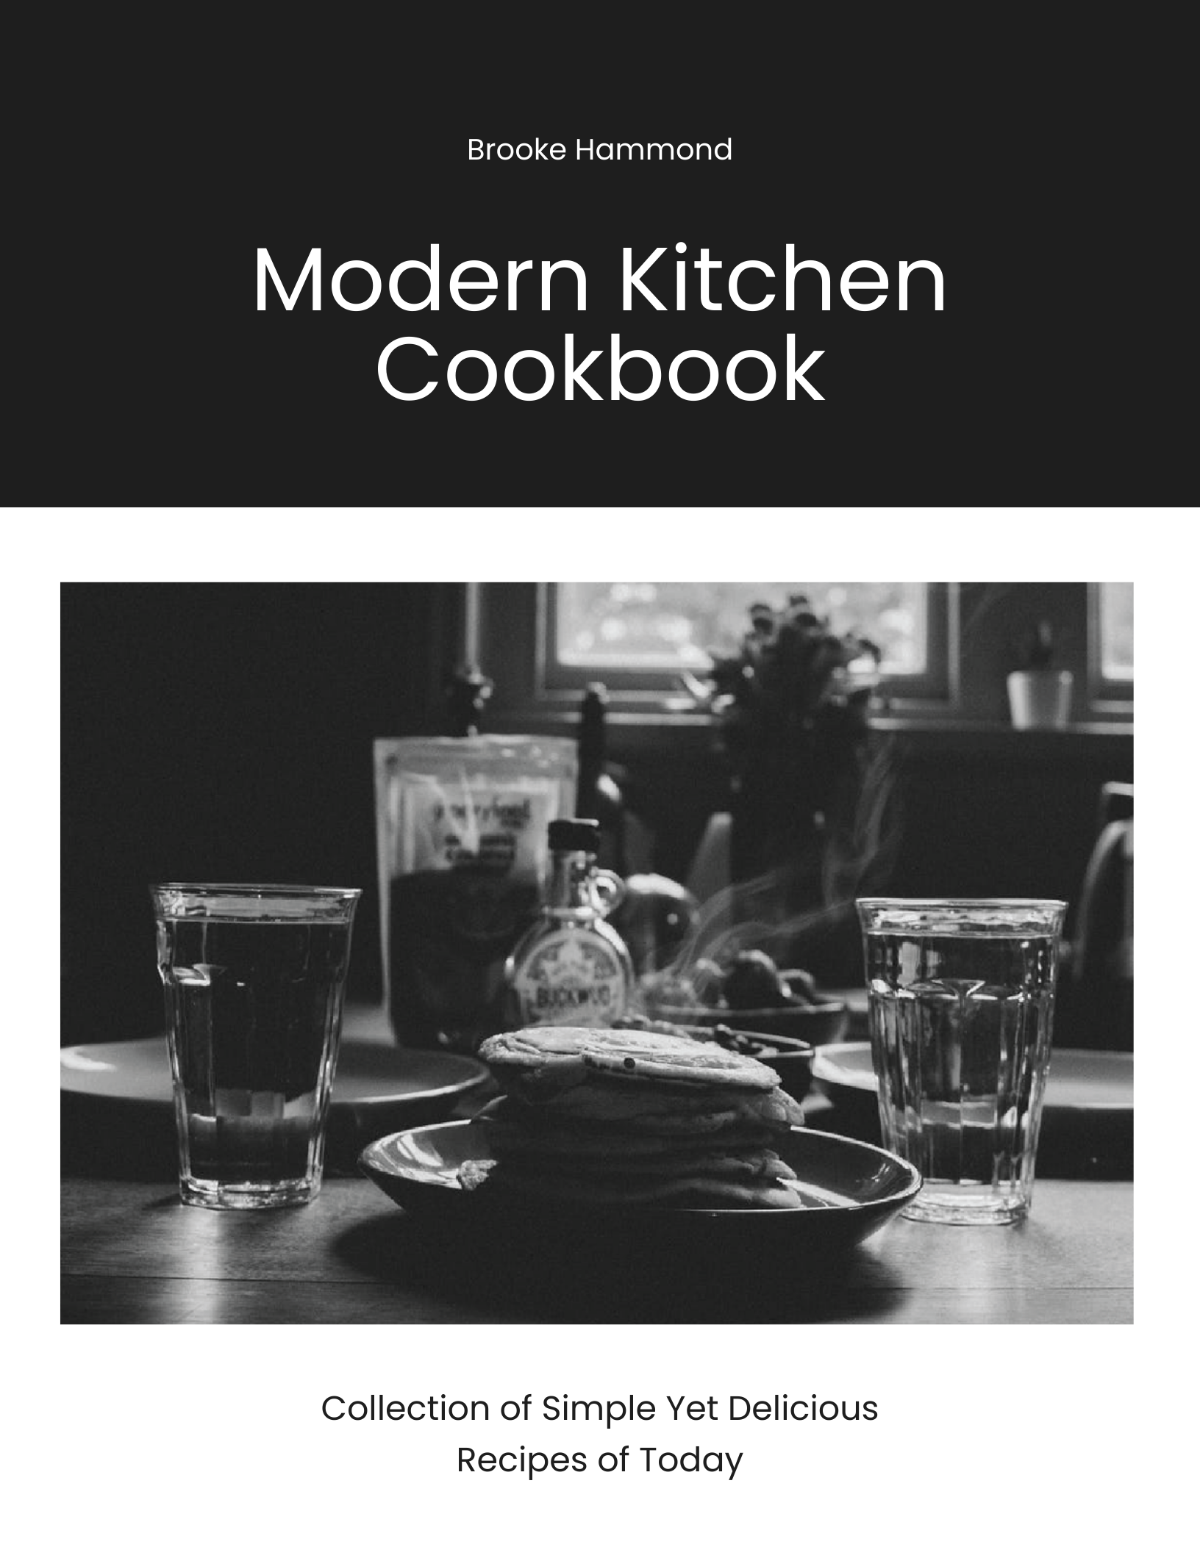 Free Modern Black and White Recipe Cookbook Template